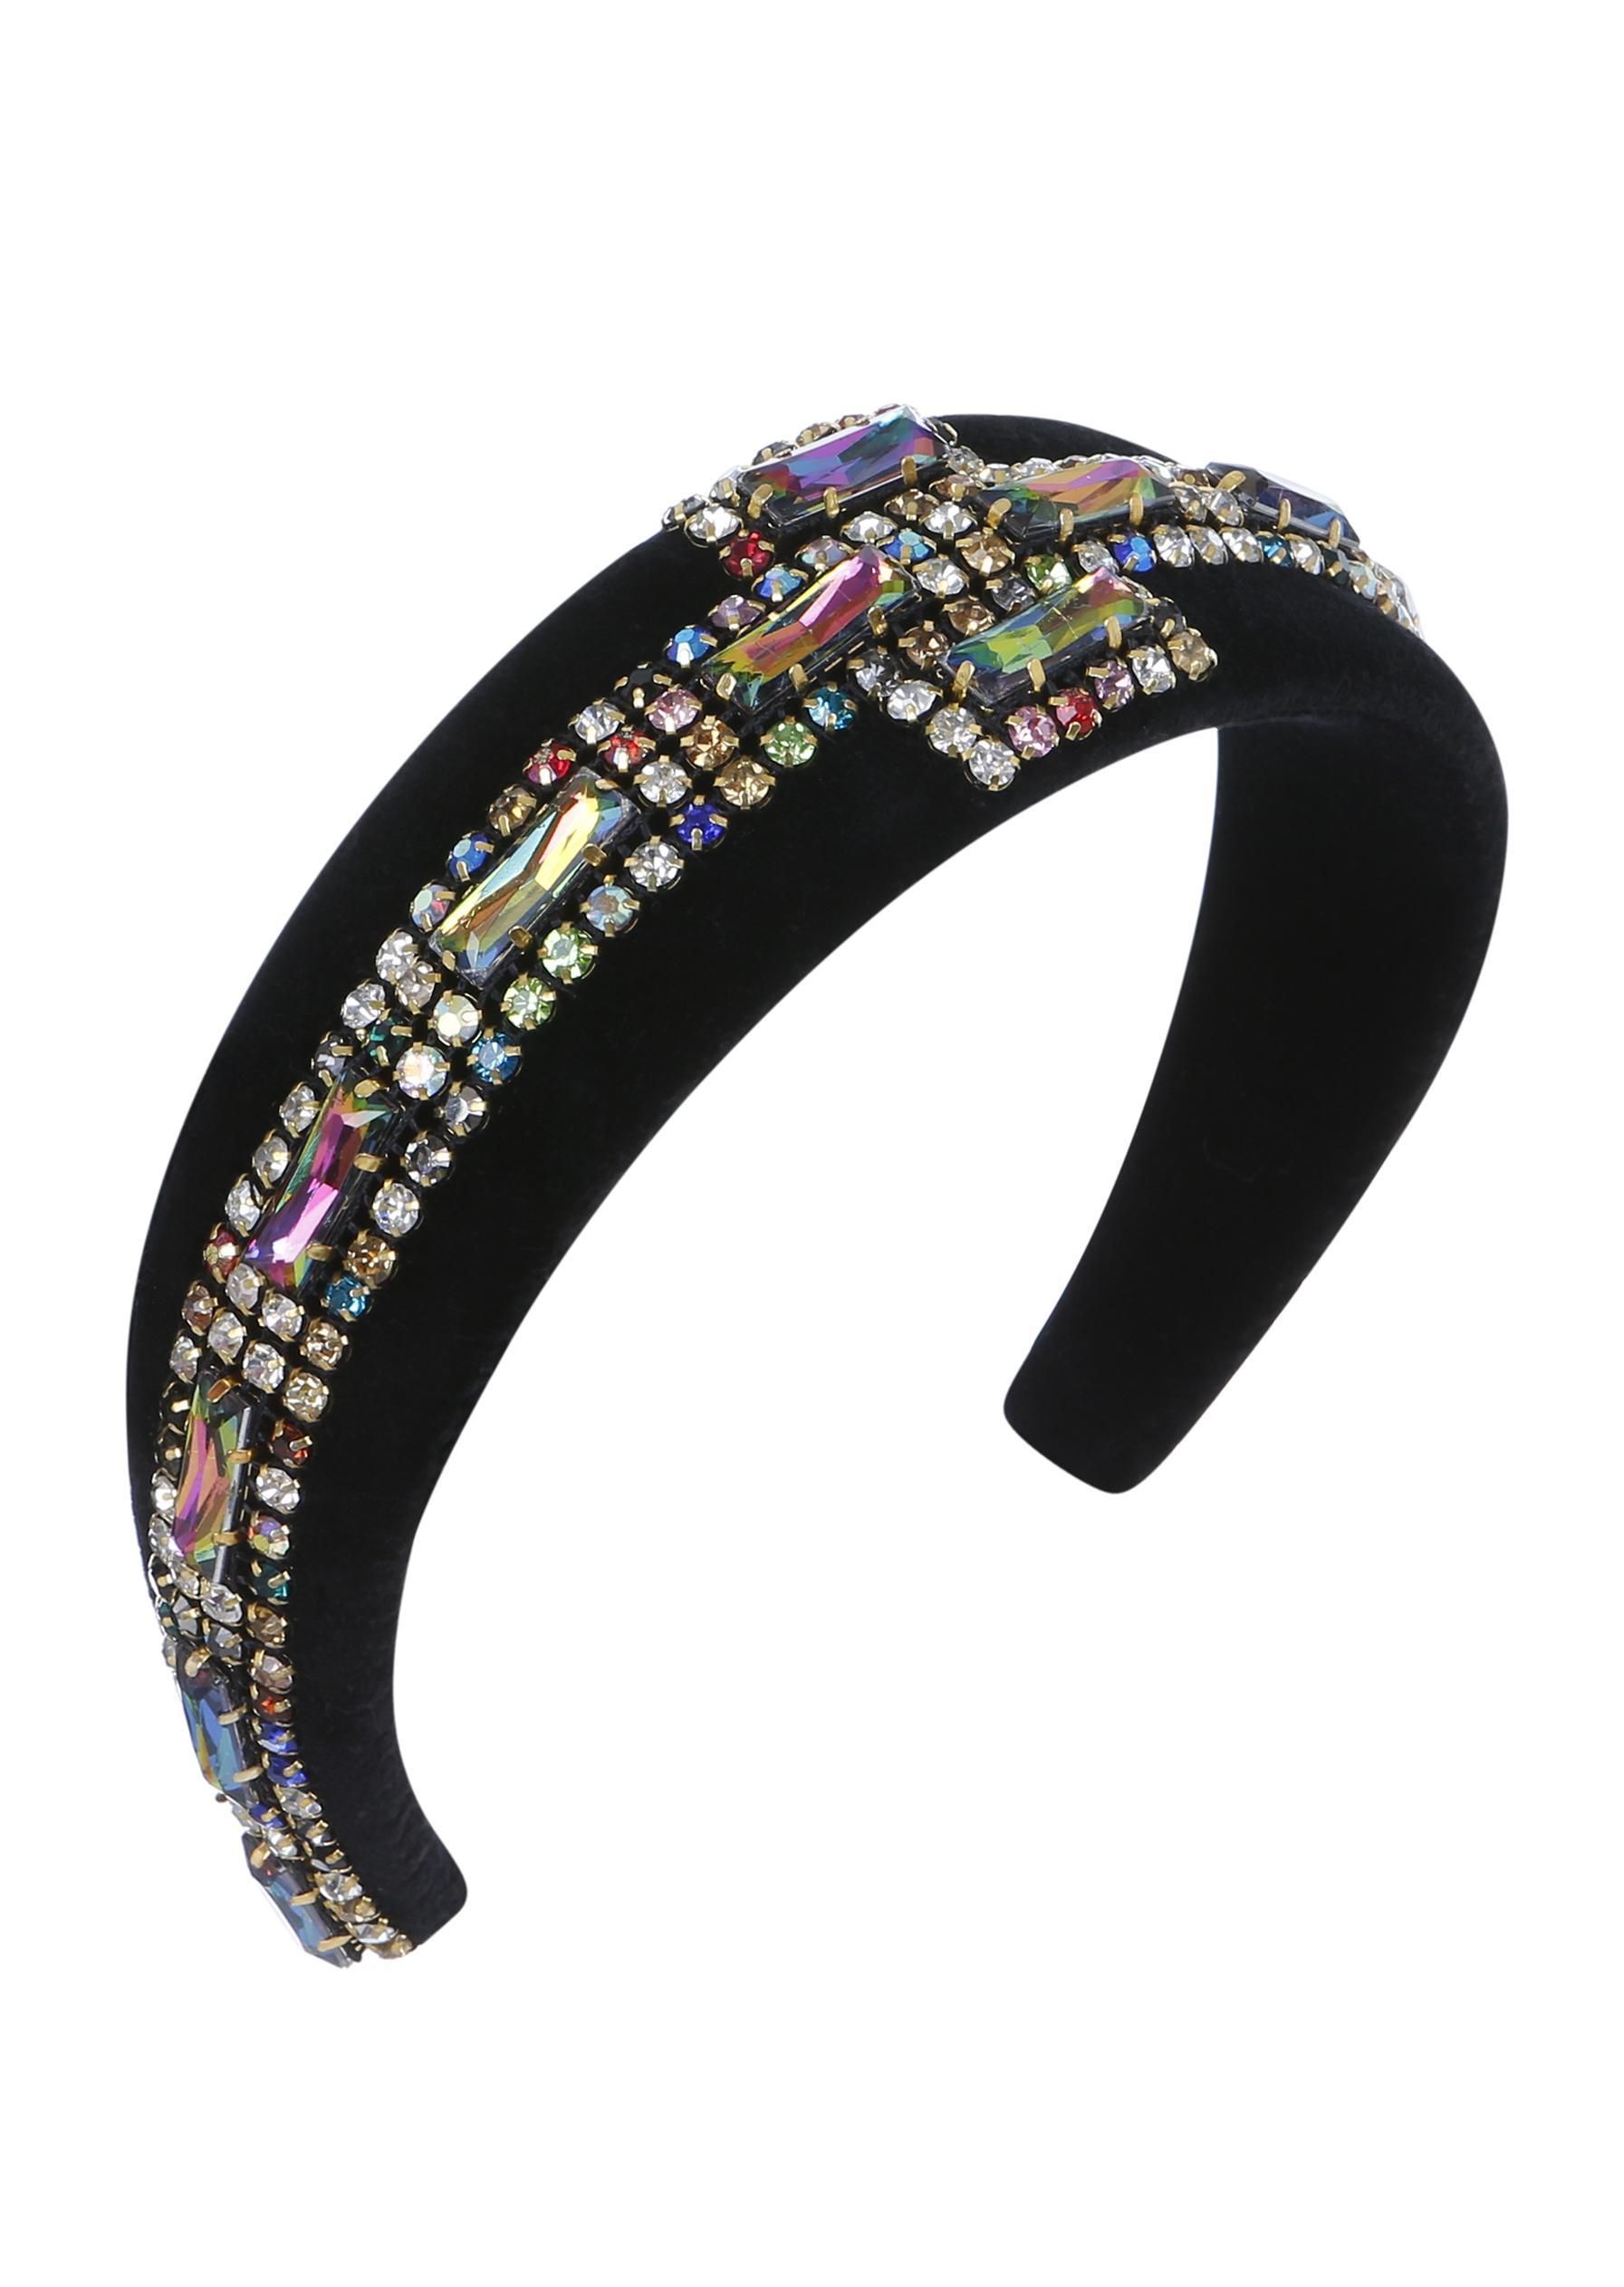 Terpsichore headband